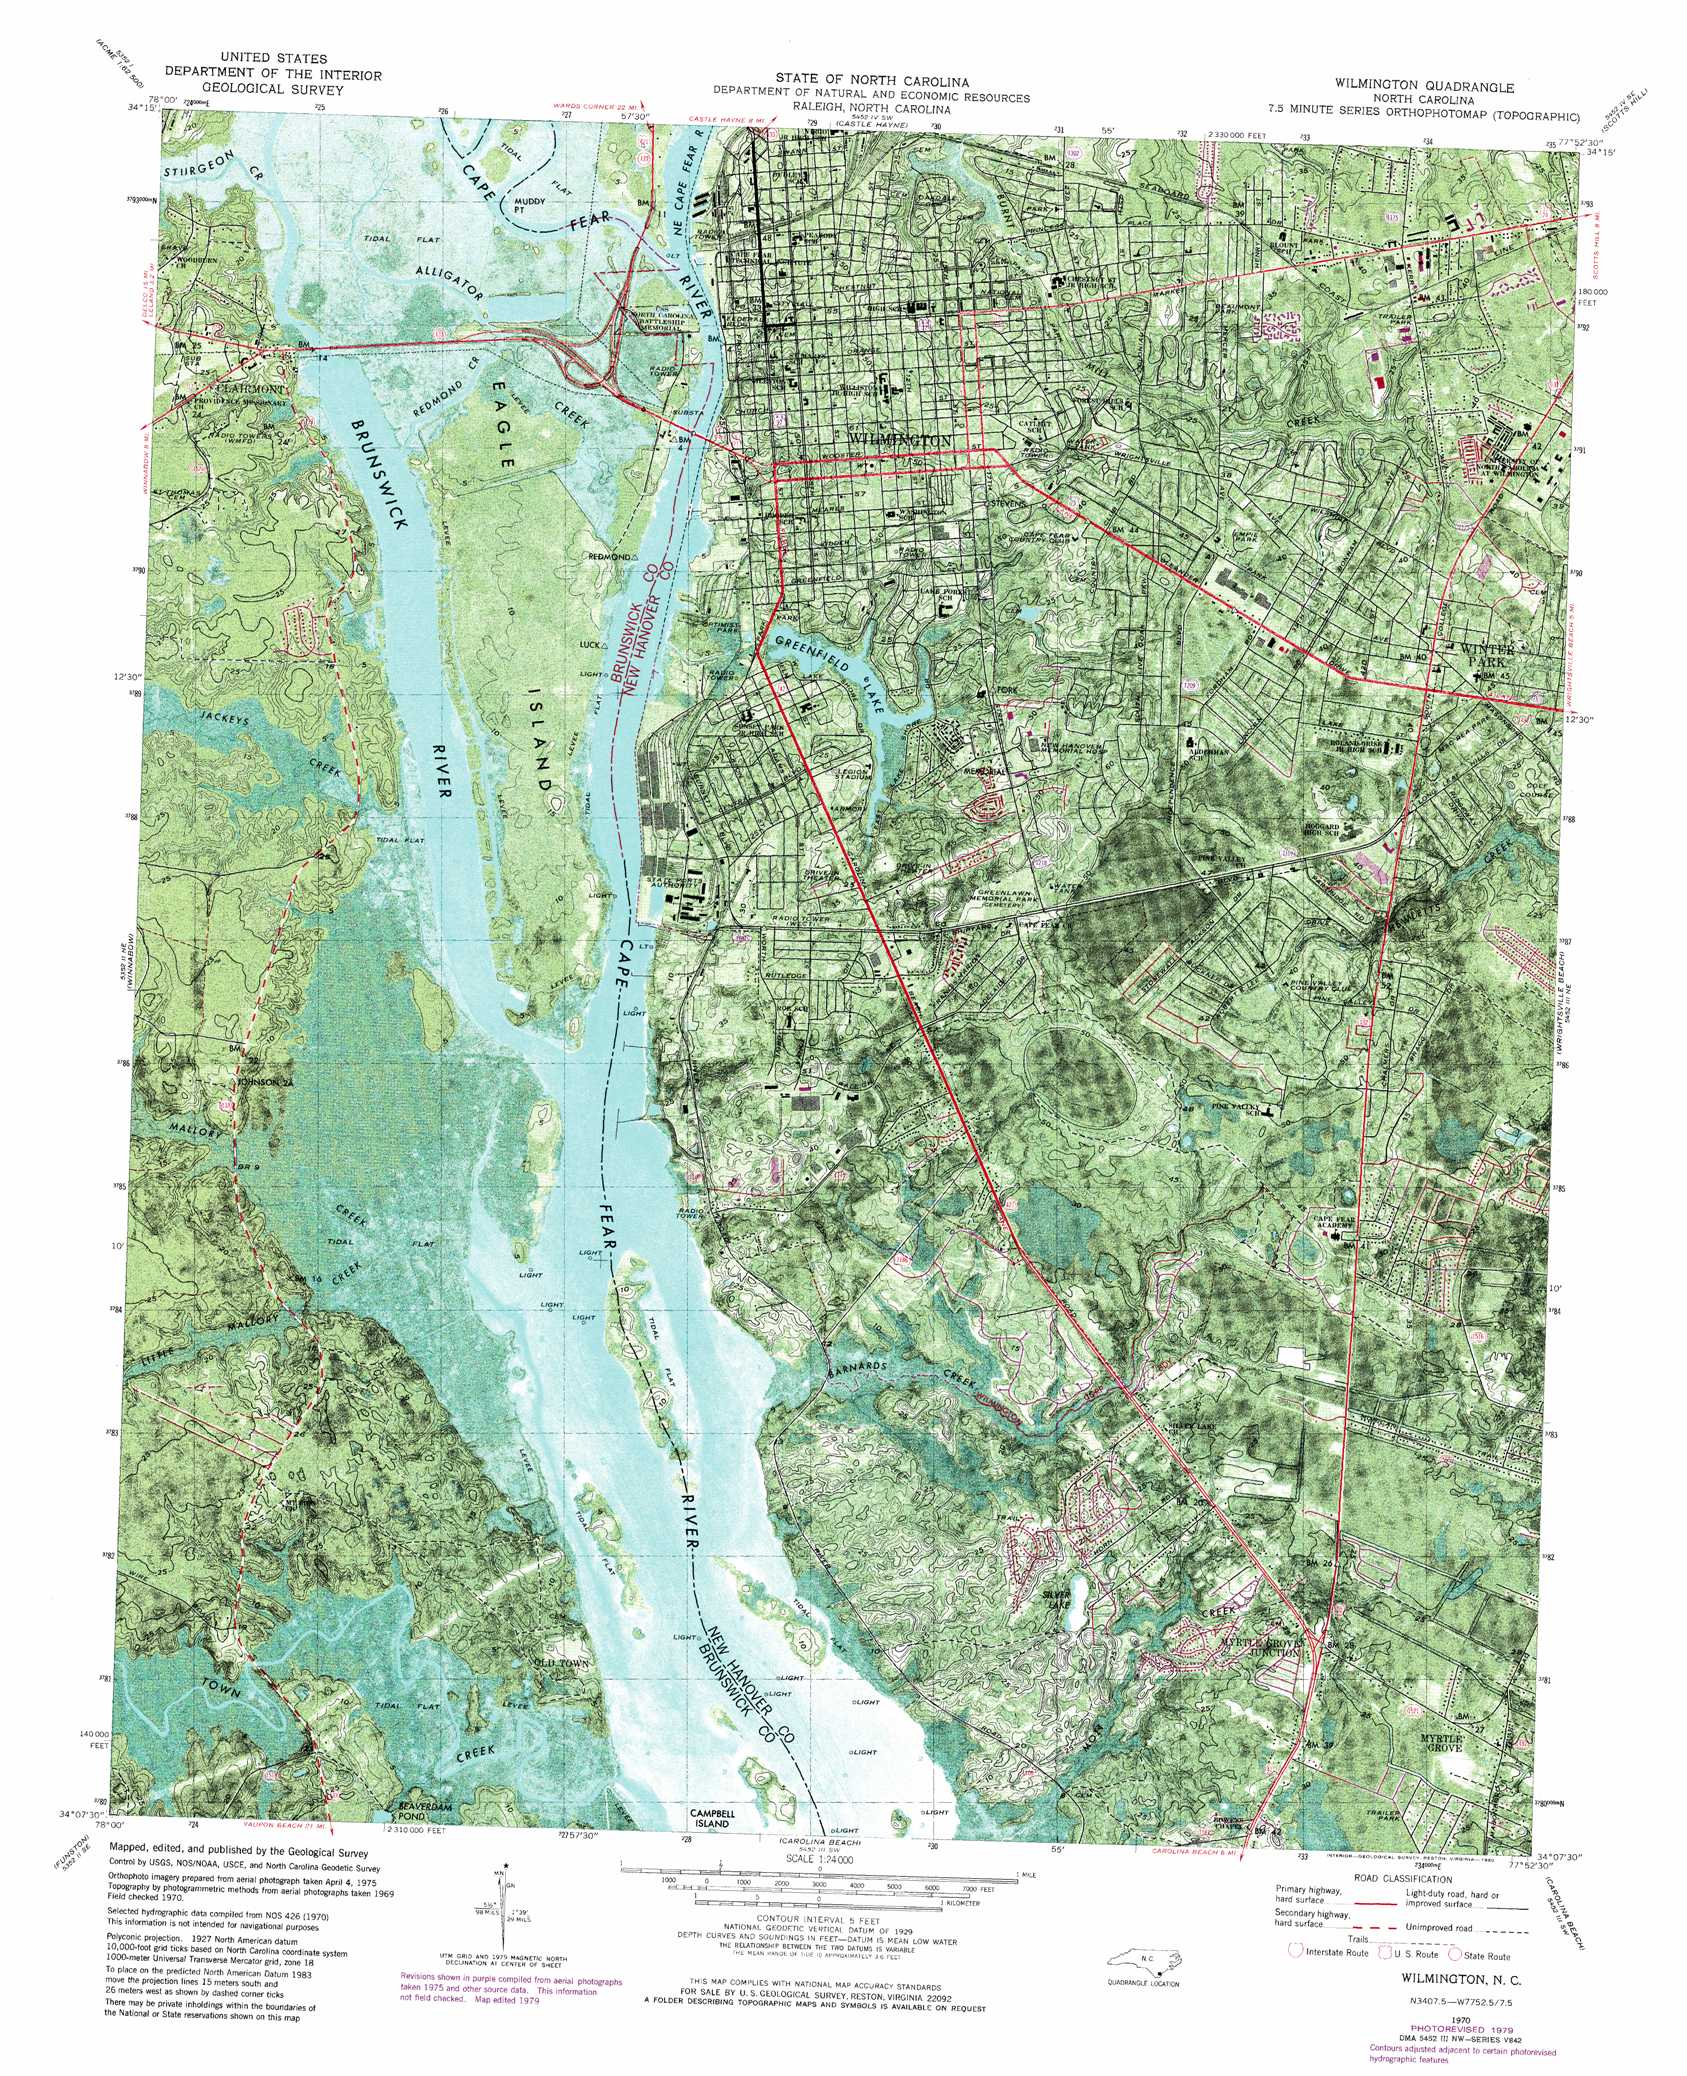 Wilmington topographic map, NC - USGS Topo Quad 34077b8